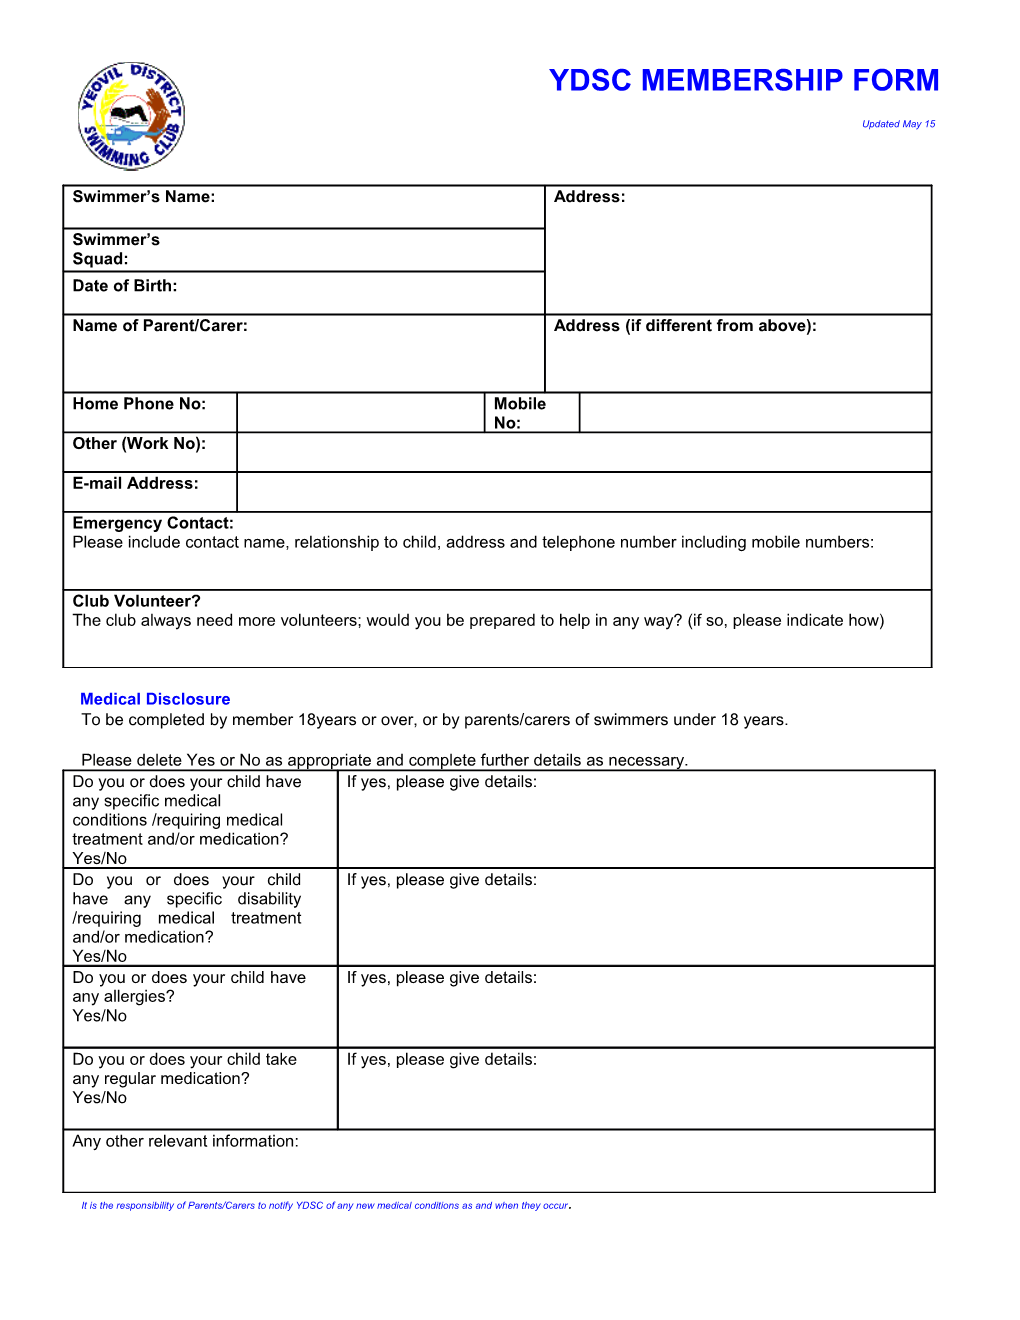 YDSC Application Form